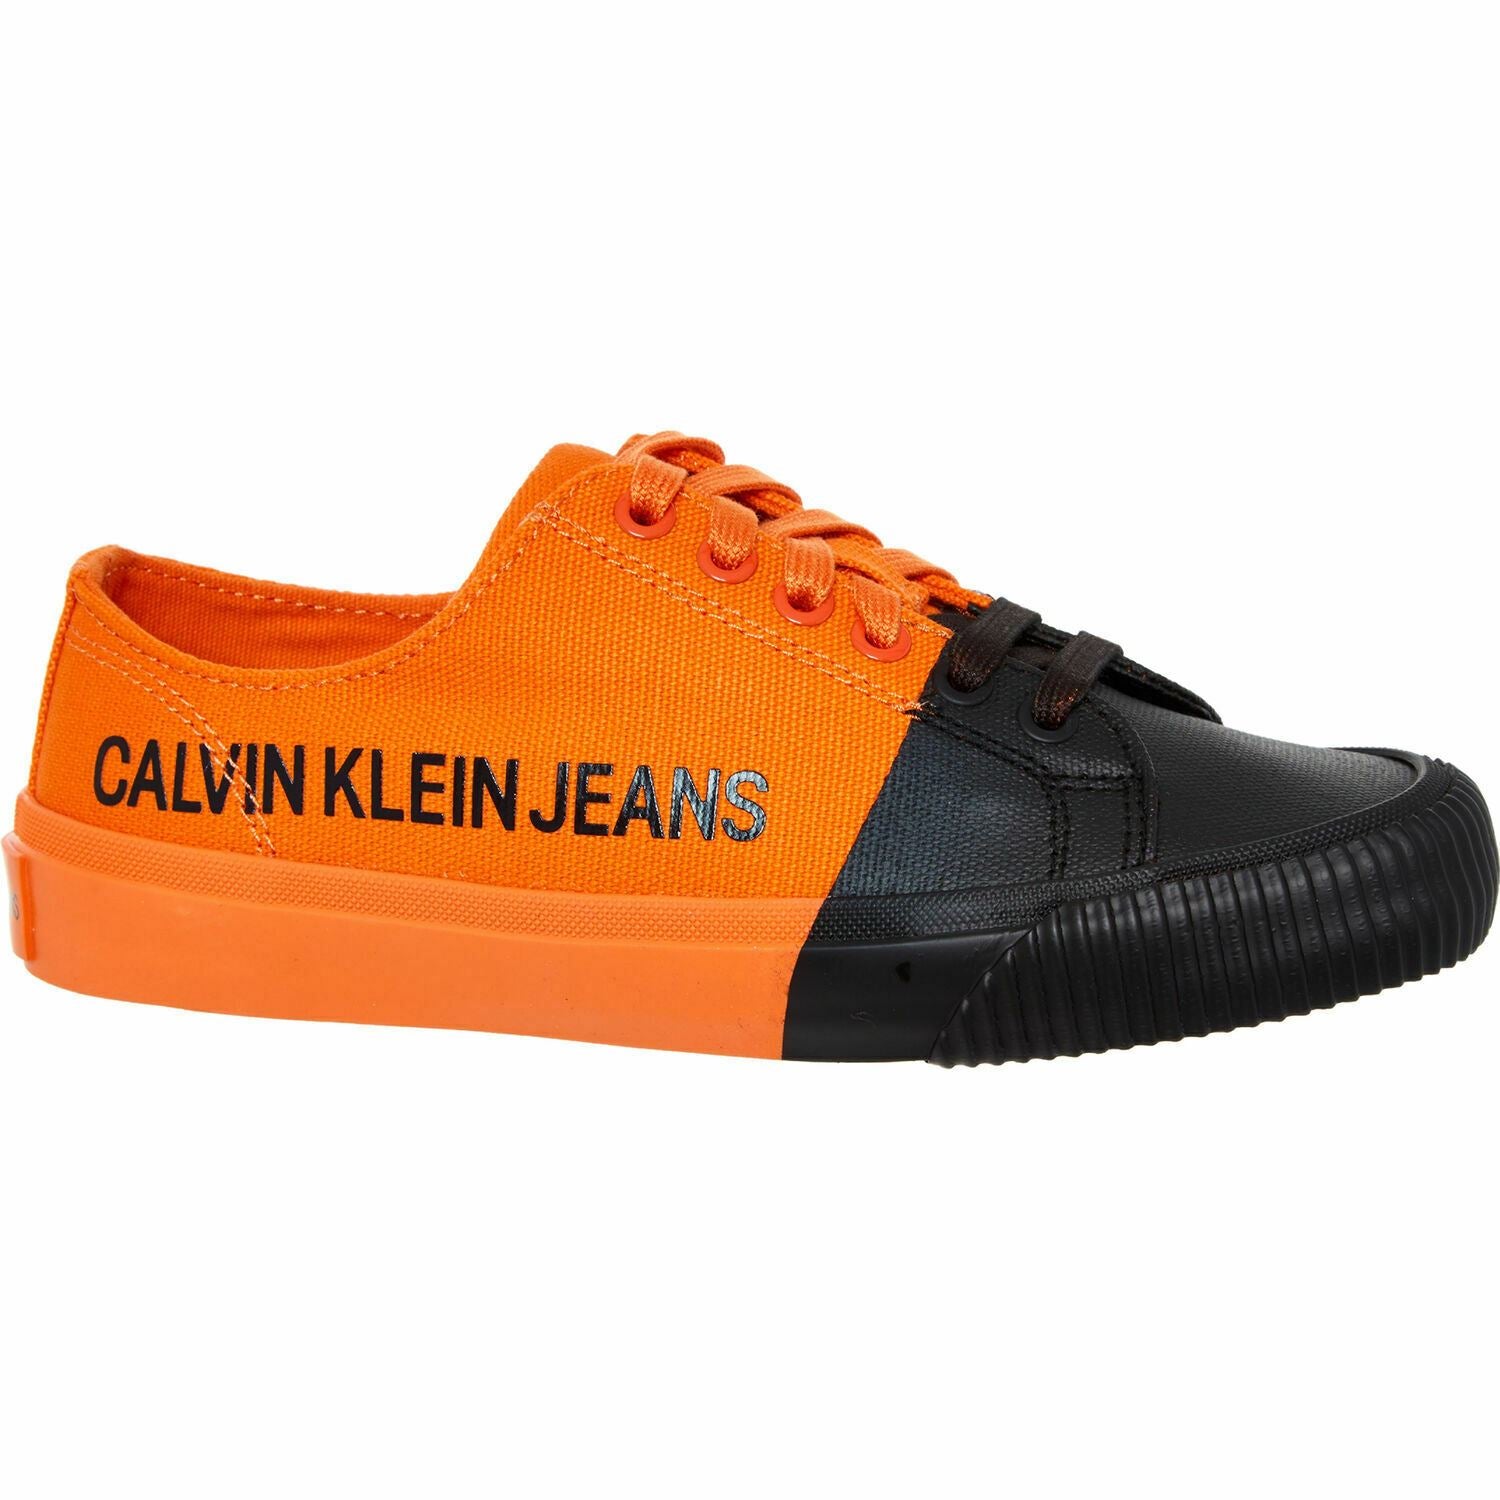 Calvin Klein Jeans Women's IVANIA Orange & Black Canvas Trainers, UK 6 RRP Â£86